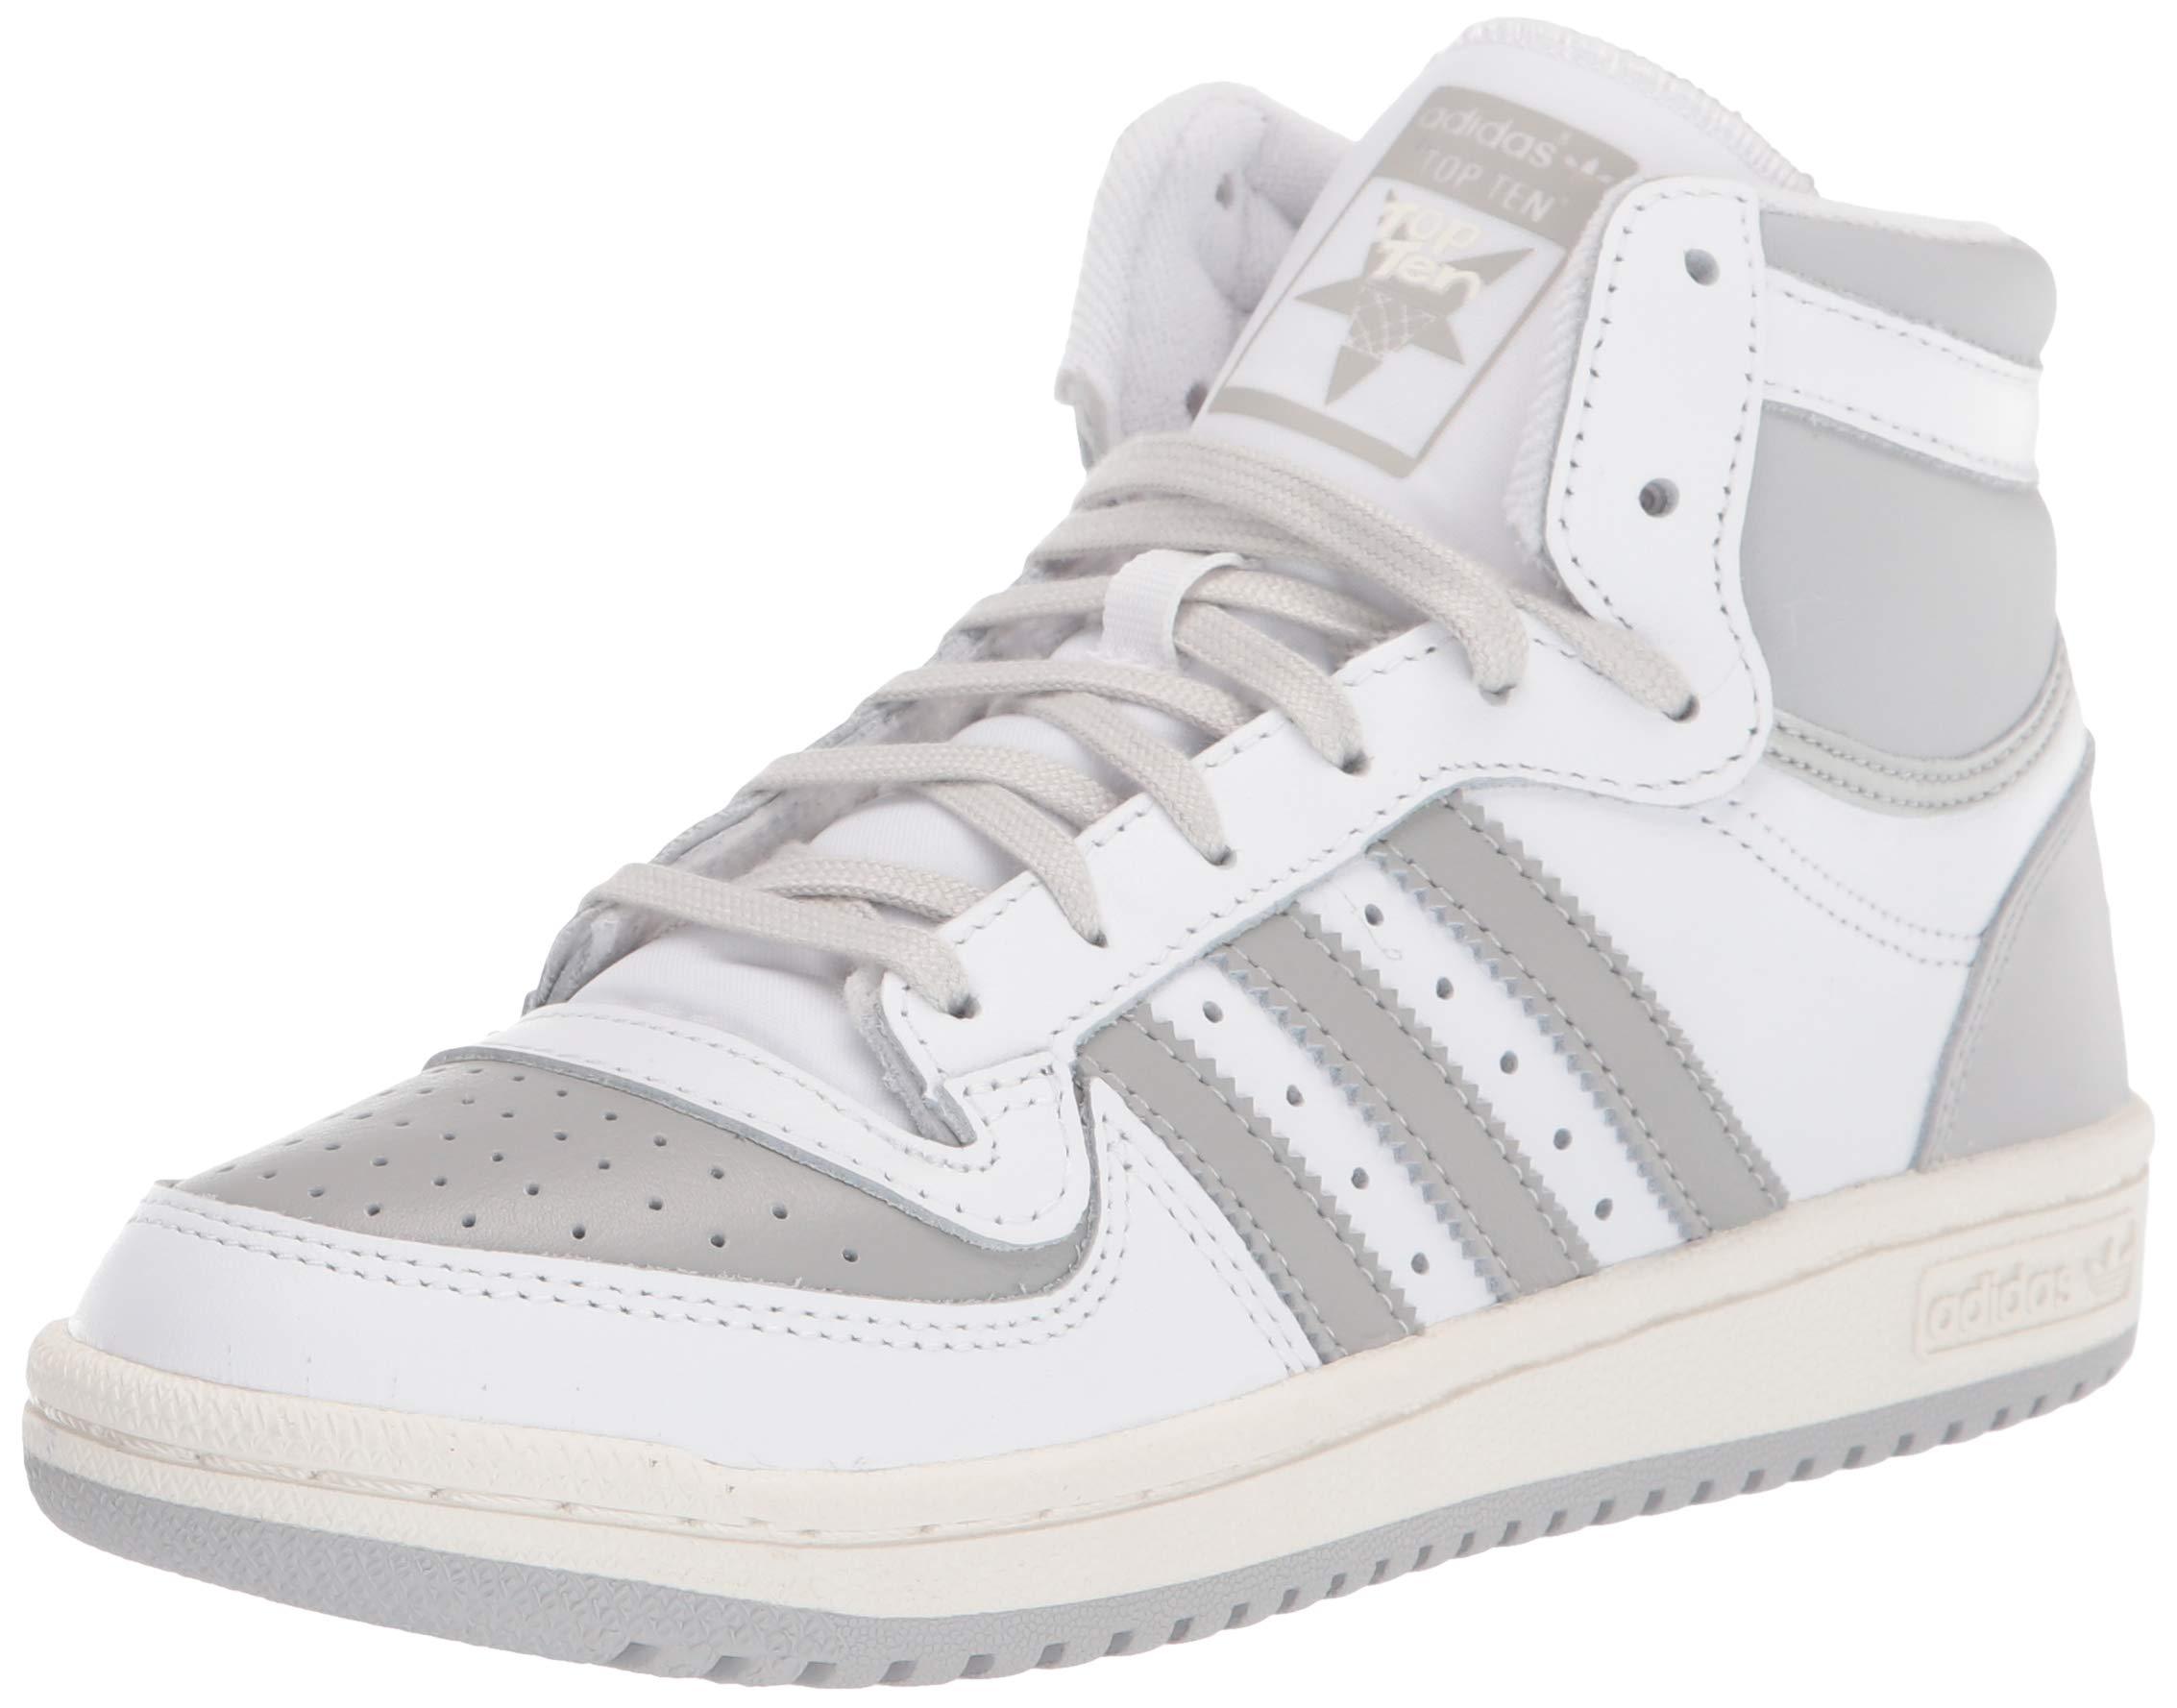 adidas Originals Top Ten Rb Sneaker in Grey (White) for Men - Save 5% ...